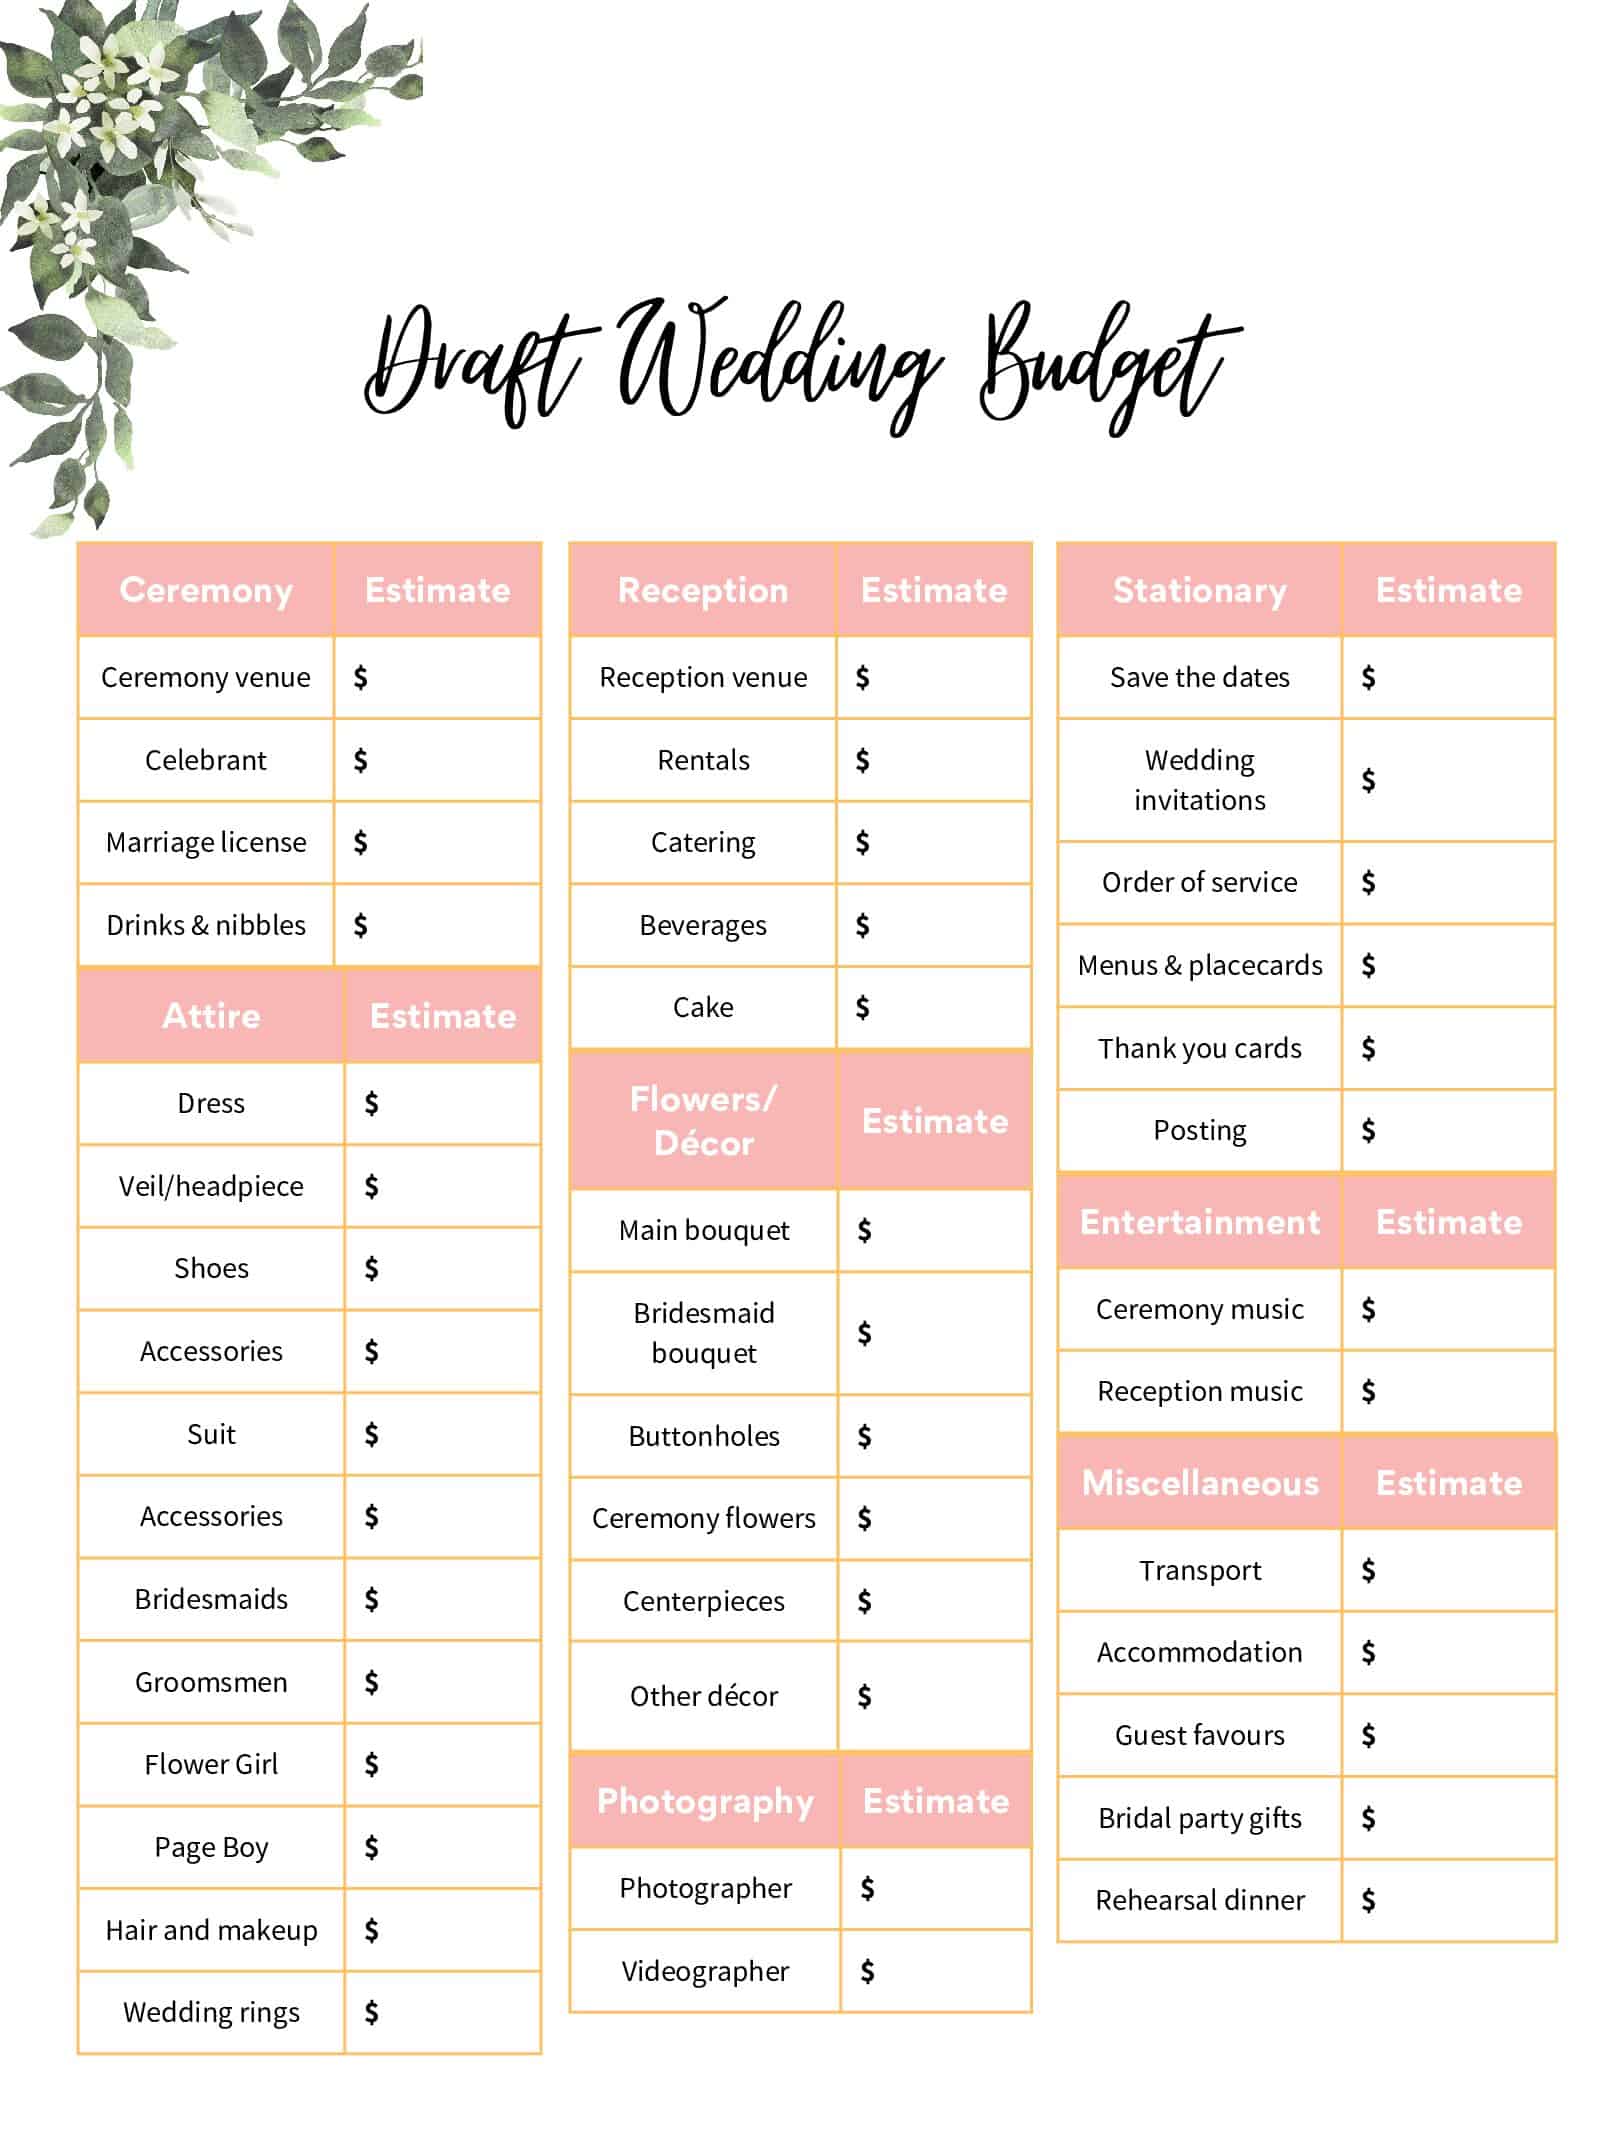 draft wedding budget